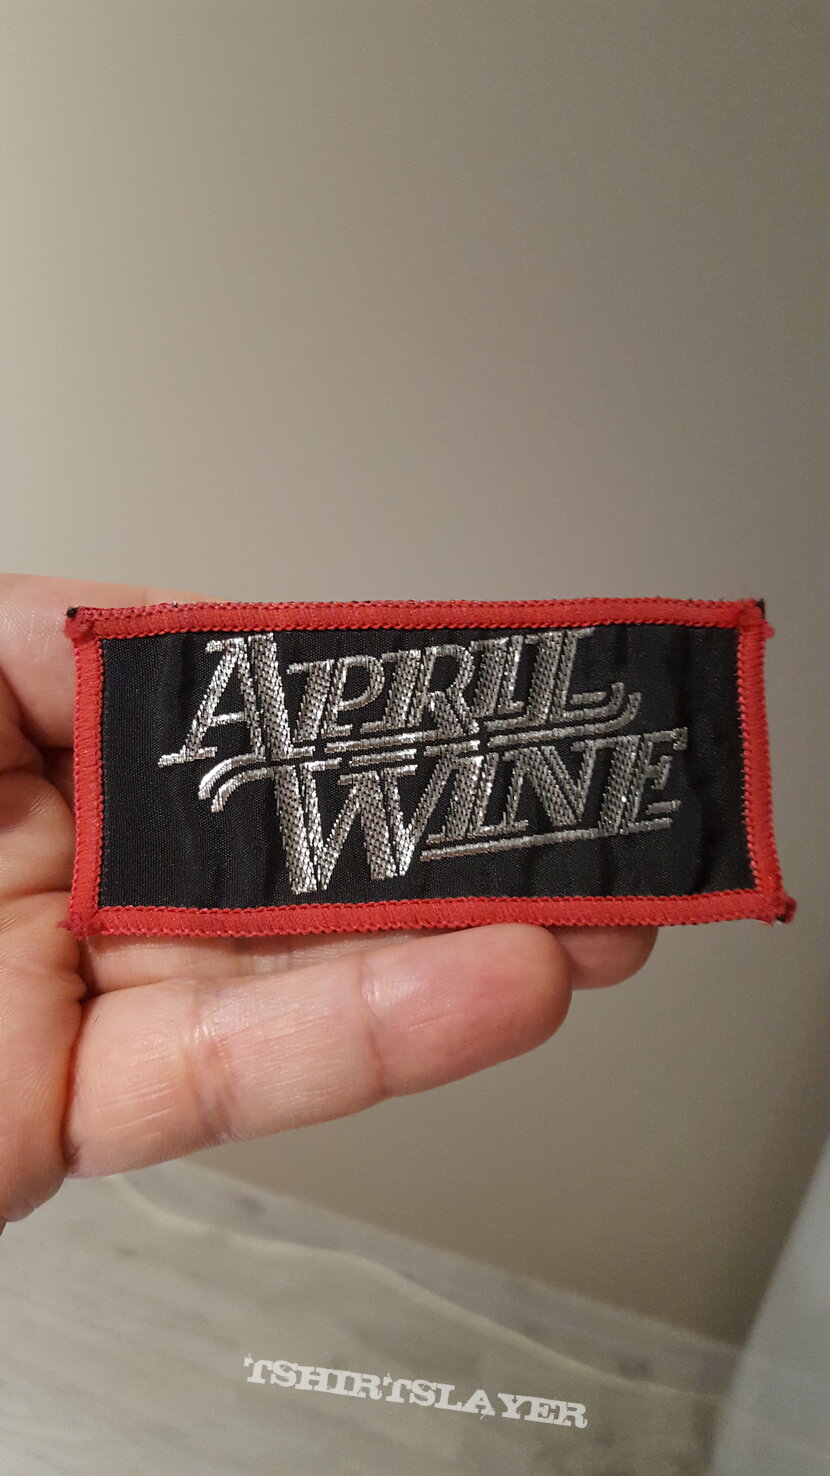 April Wine patch